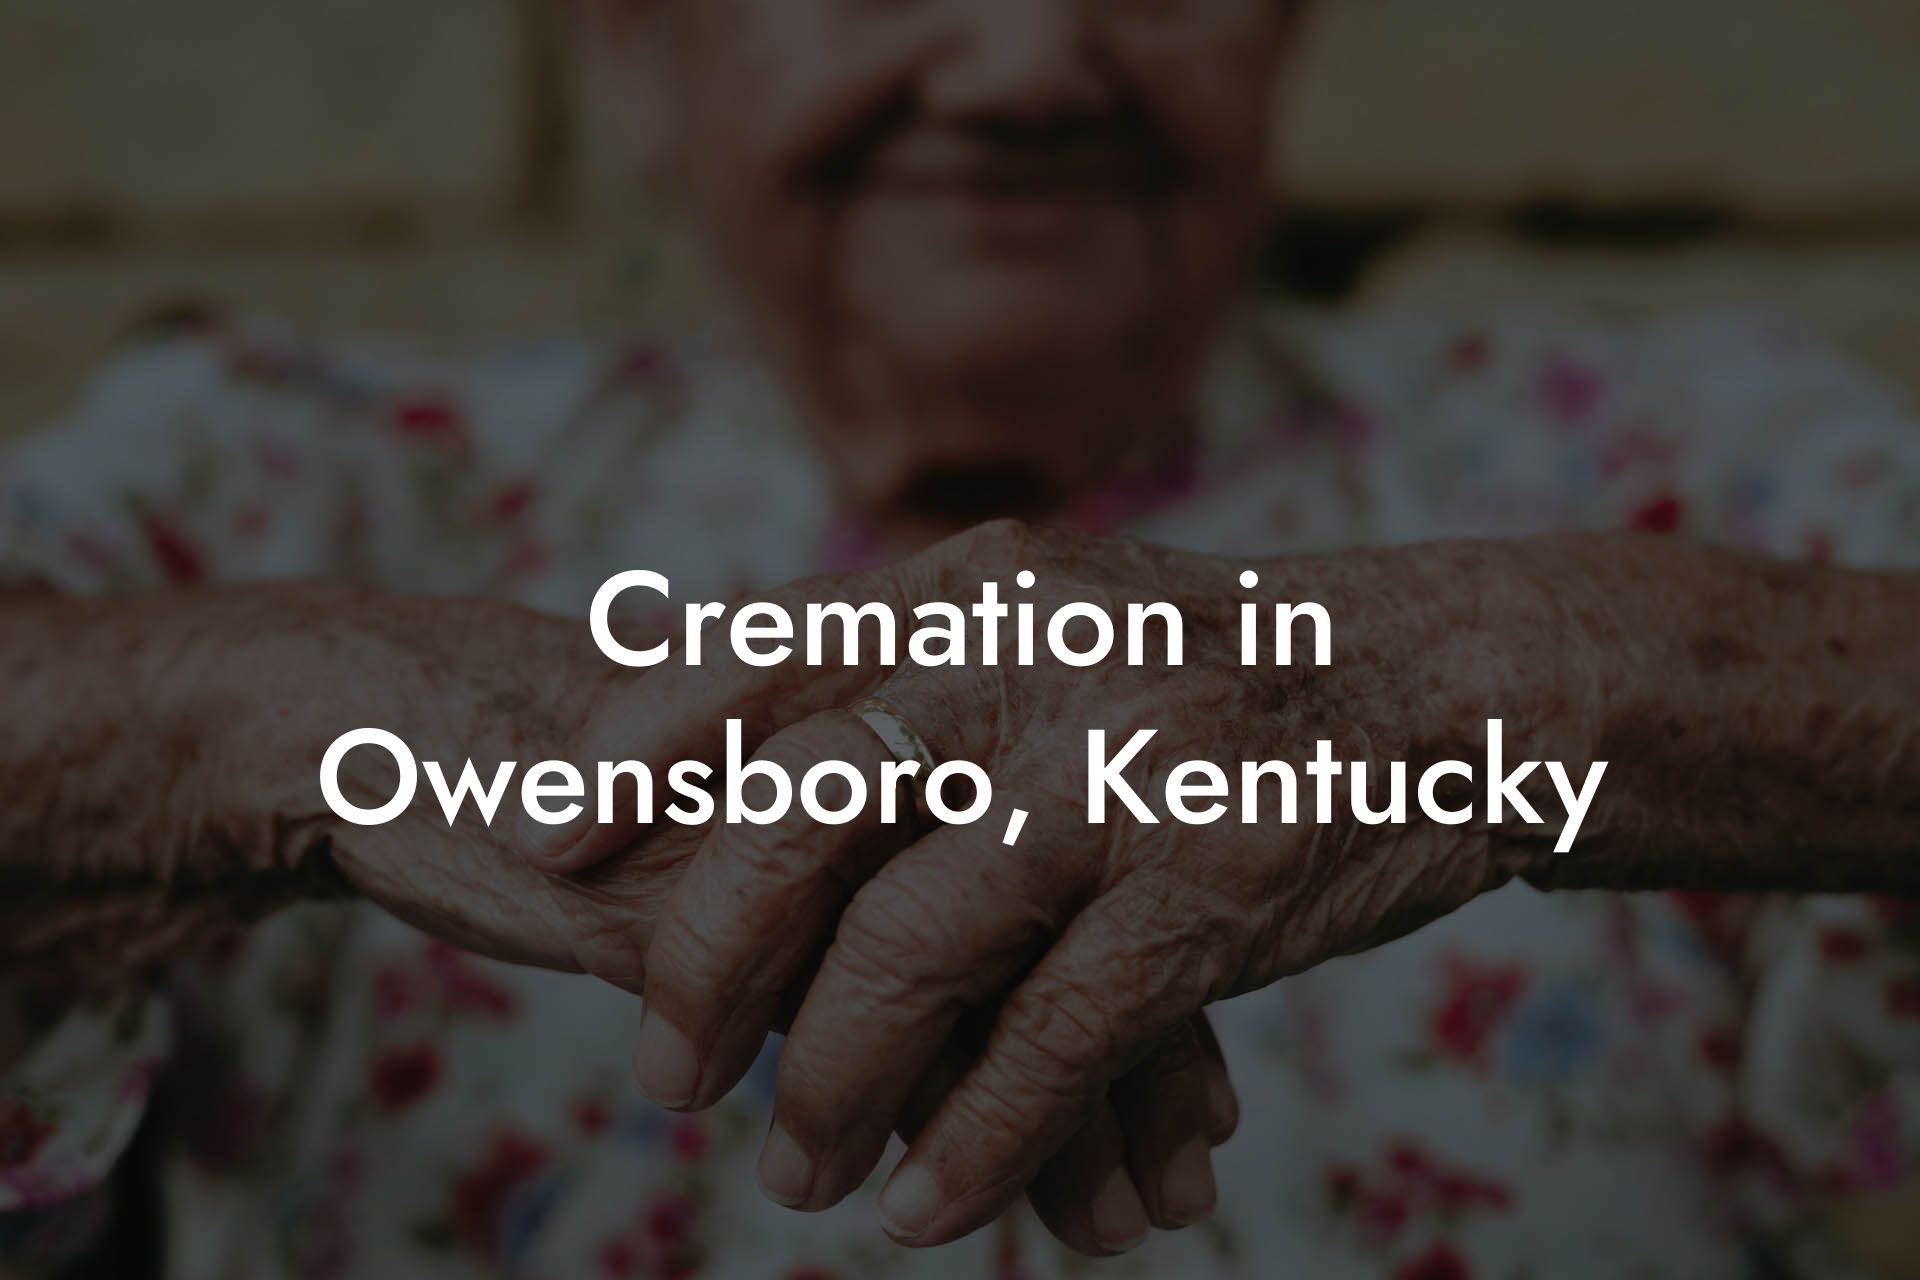 Cremation in Owensboro, Kentucky